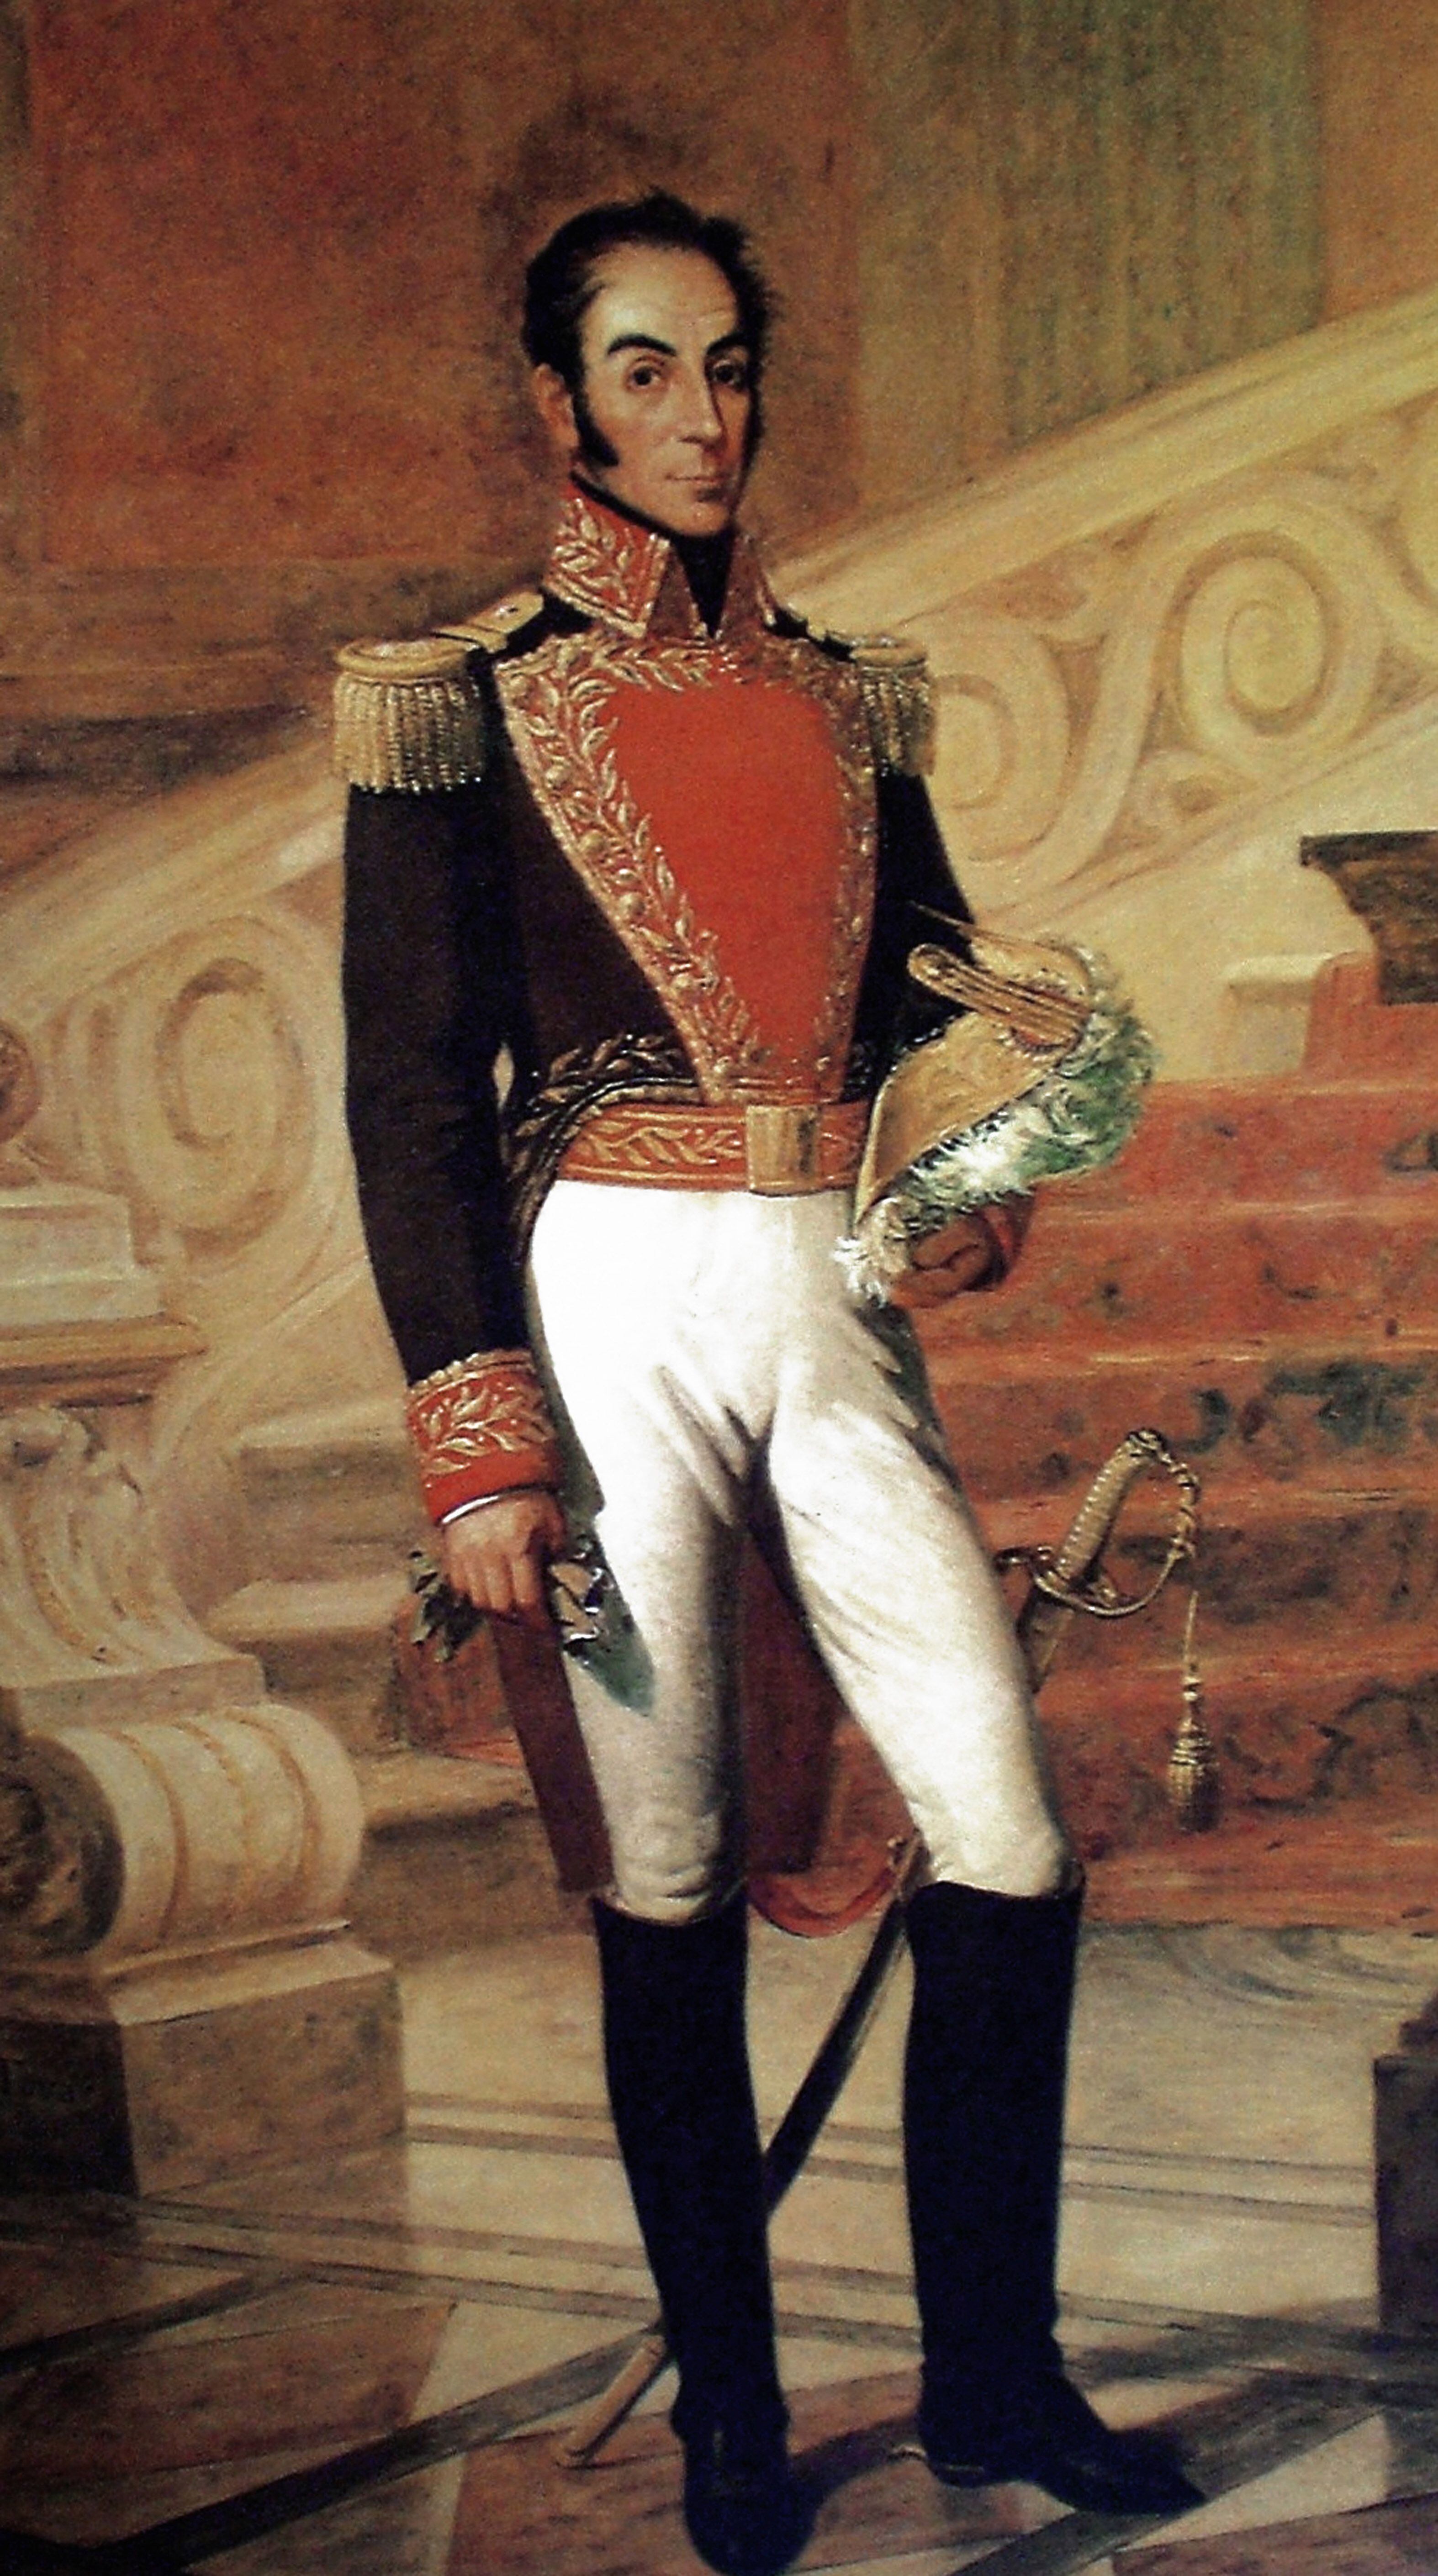 Retrato del caudillo bolivariano Simón Bolívar.